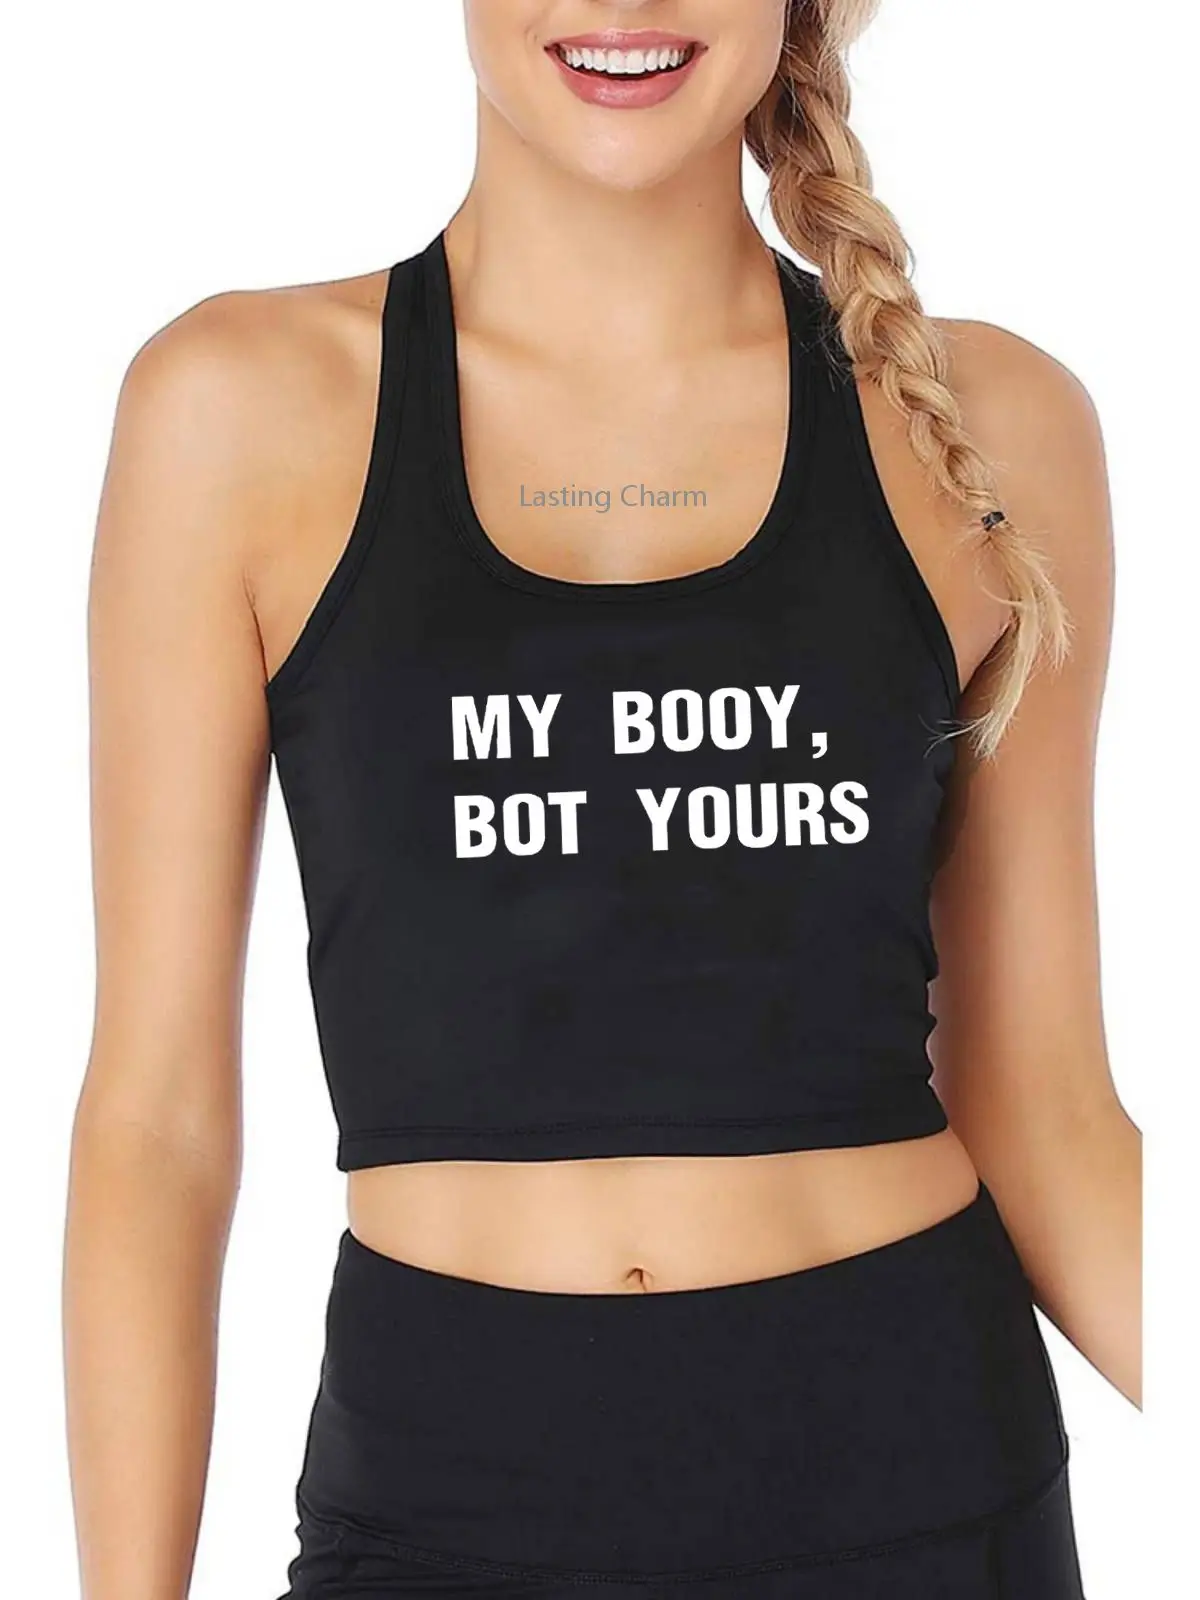 

My Booy, Bot Yours Pattern Tank Top Women's Humor Fun Flirt Print Yoga Sports Workout Crop Top Gym Tops